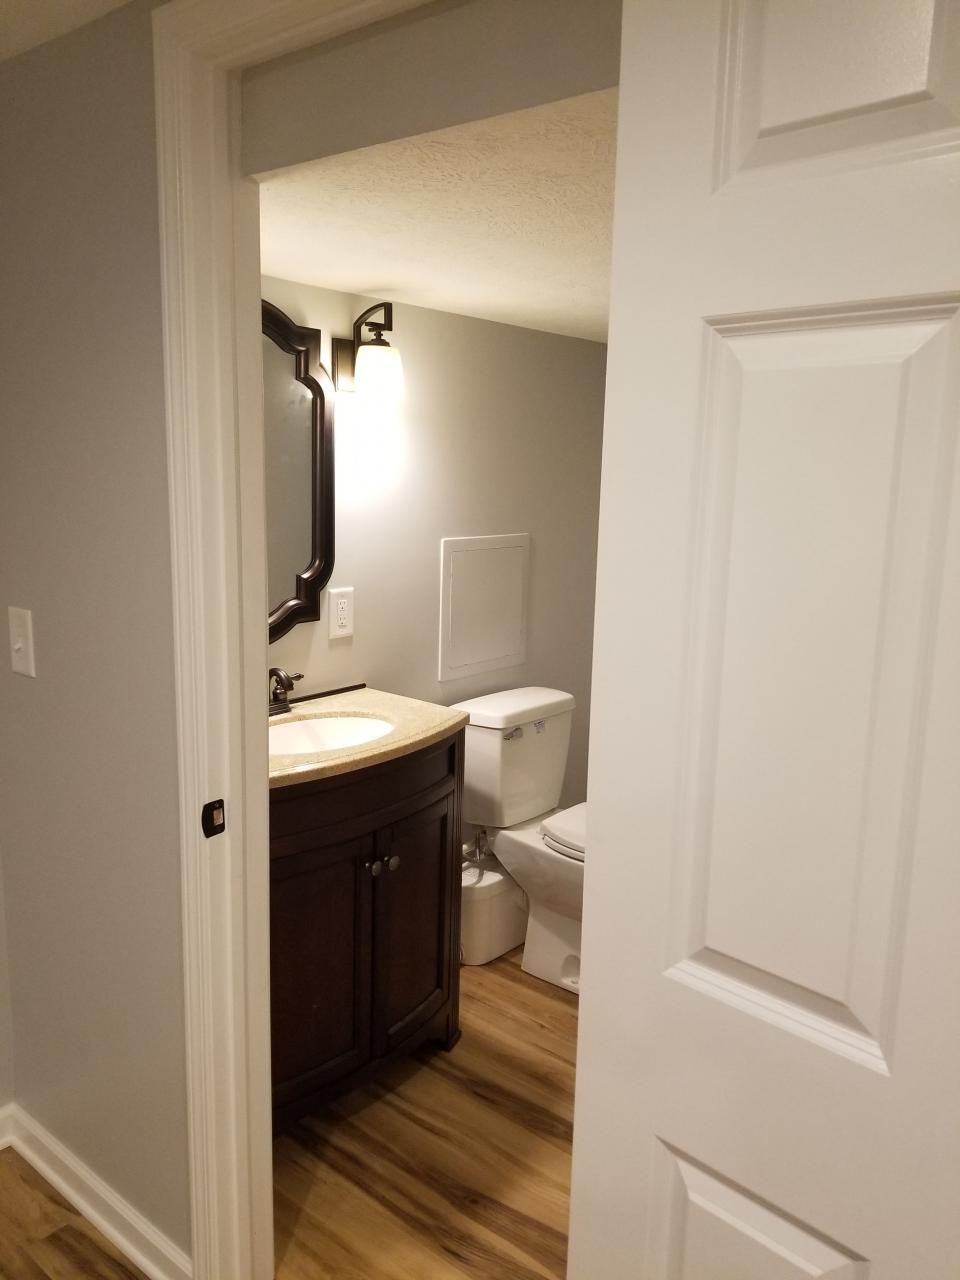 Bathroom Remodeling Contractors in Columbus OH